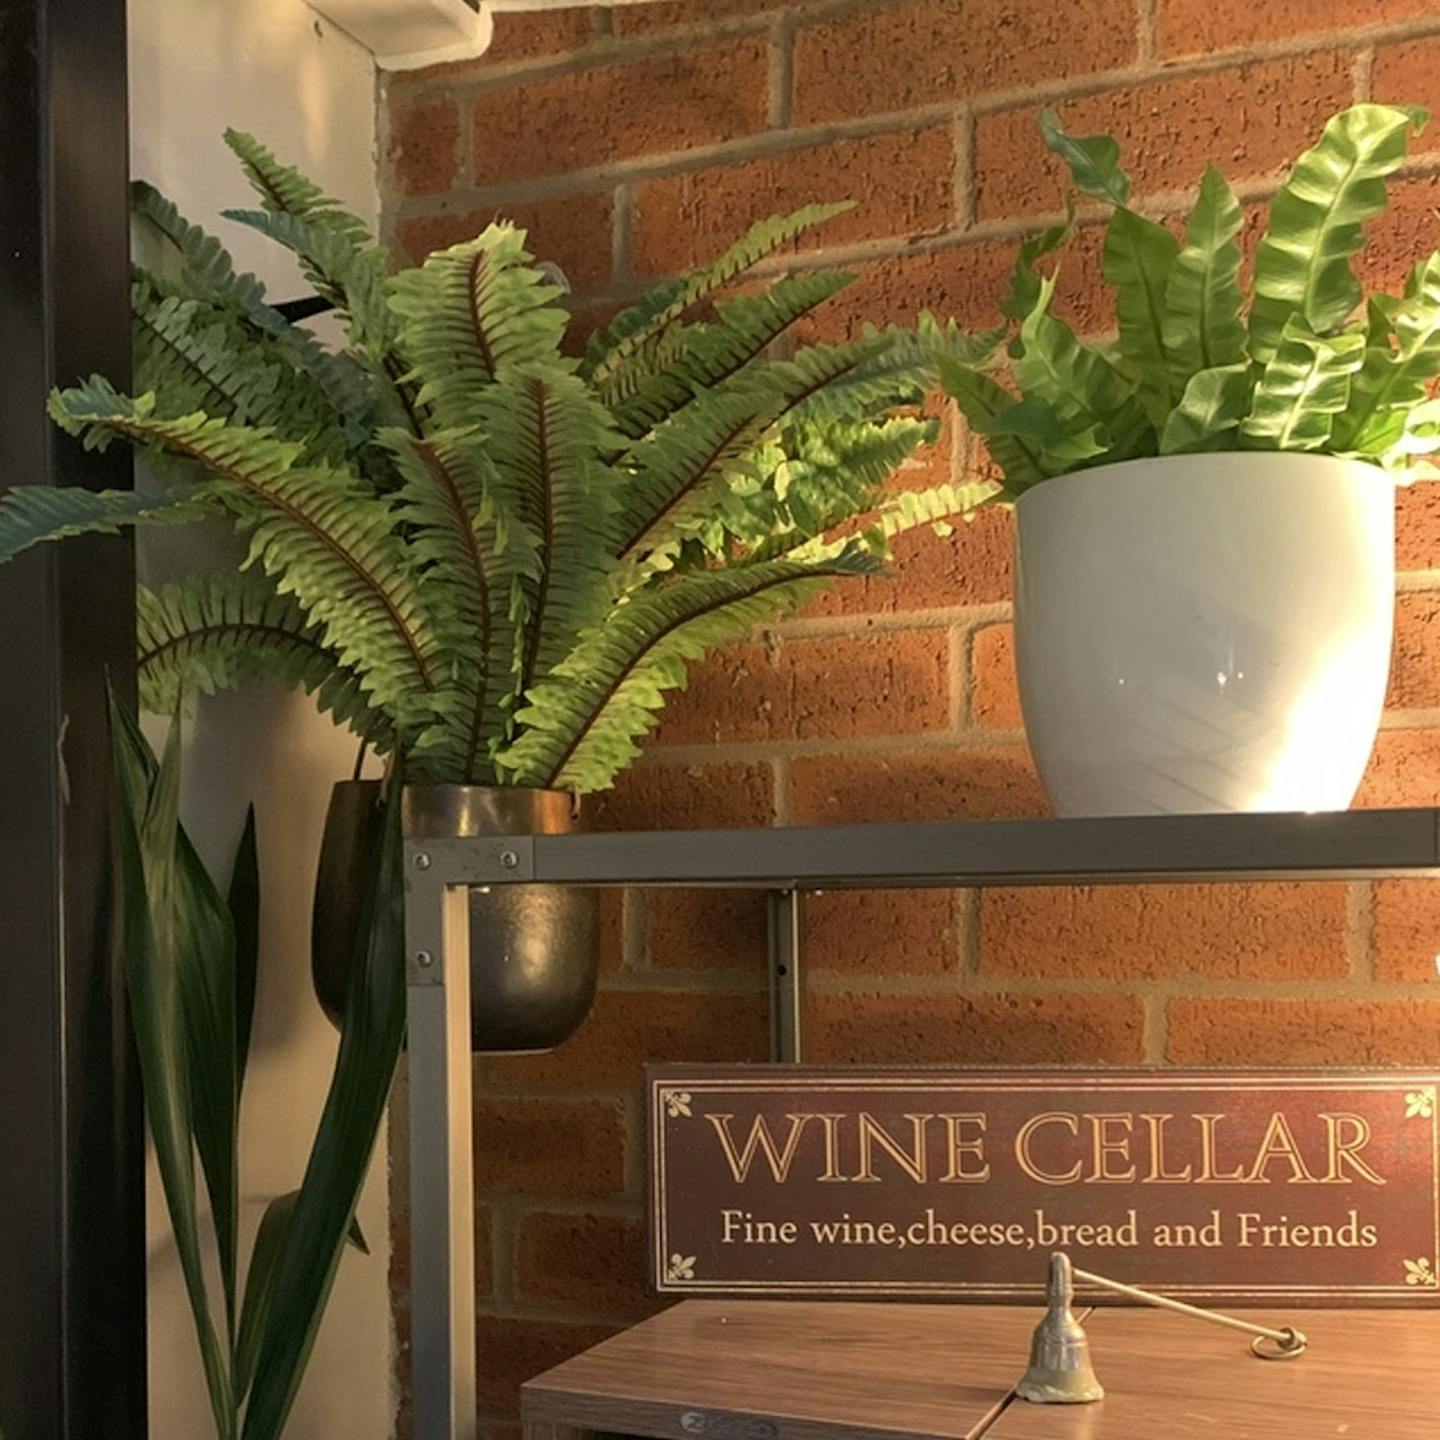 Wine cellar decorated with fake Boston fern